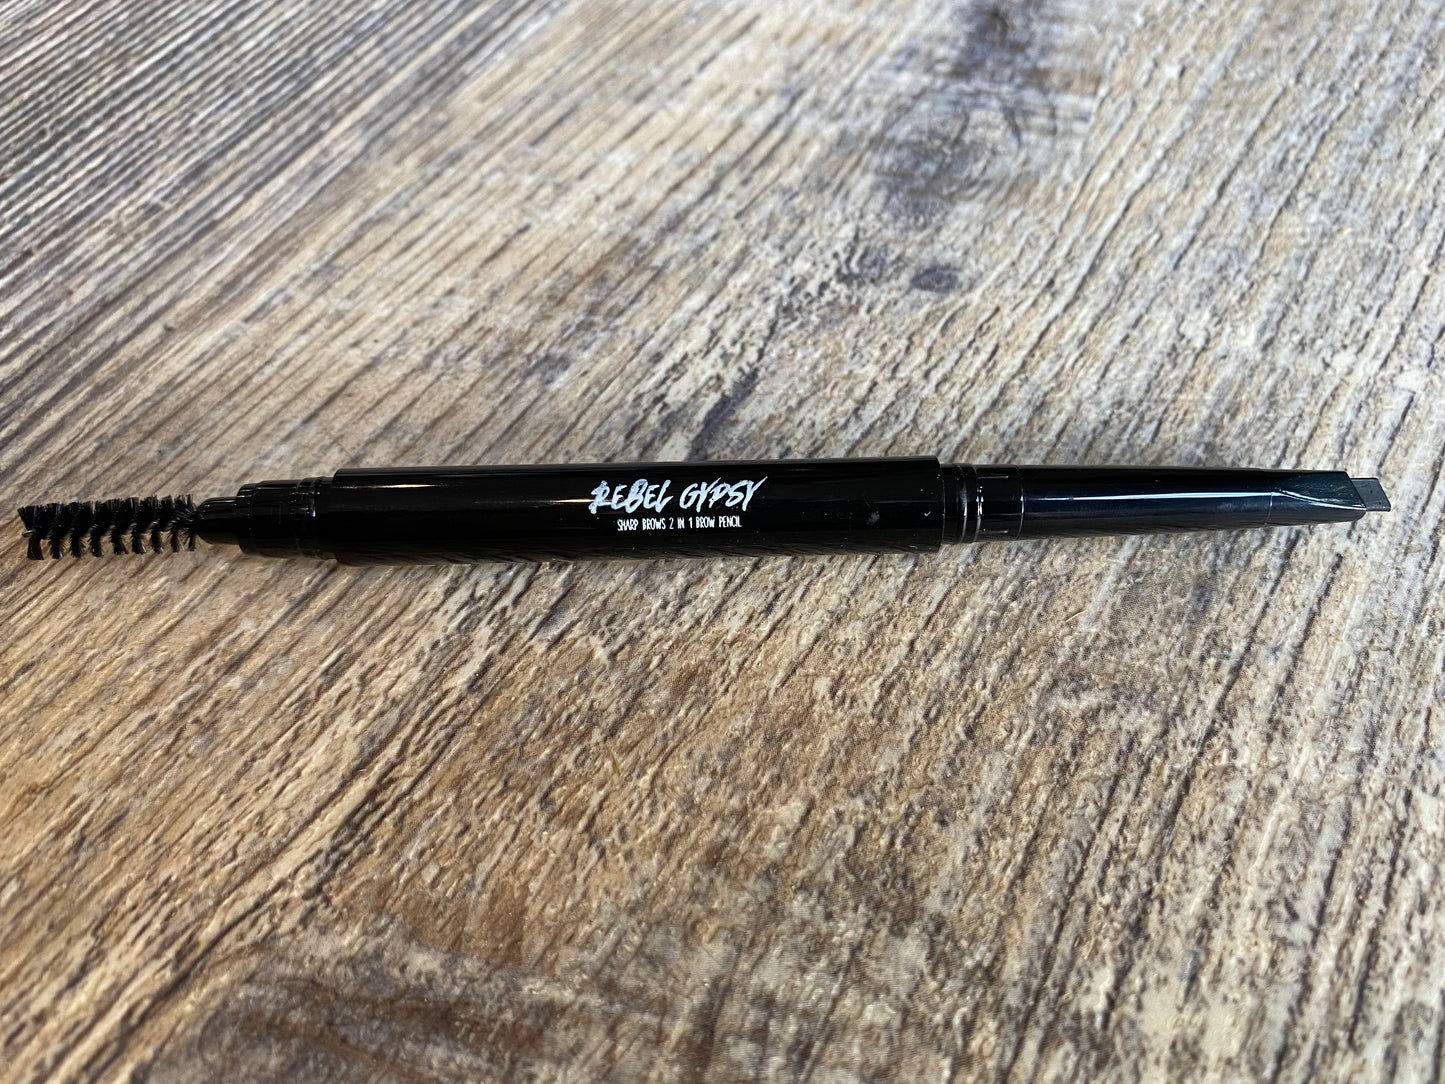 Rebel Gypsy Sharp Brows 2 In 1 Brow Pencil